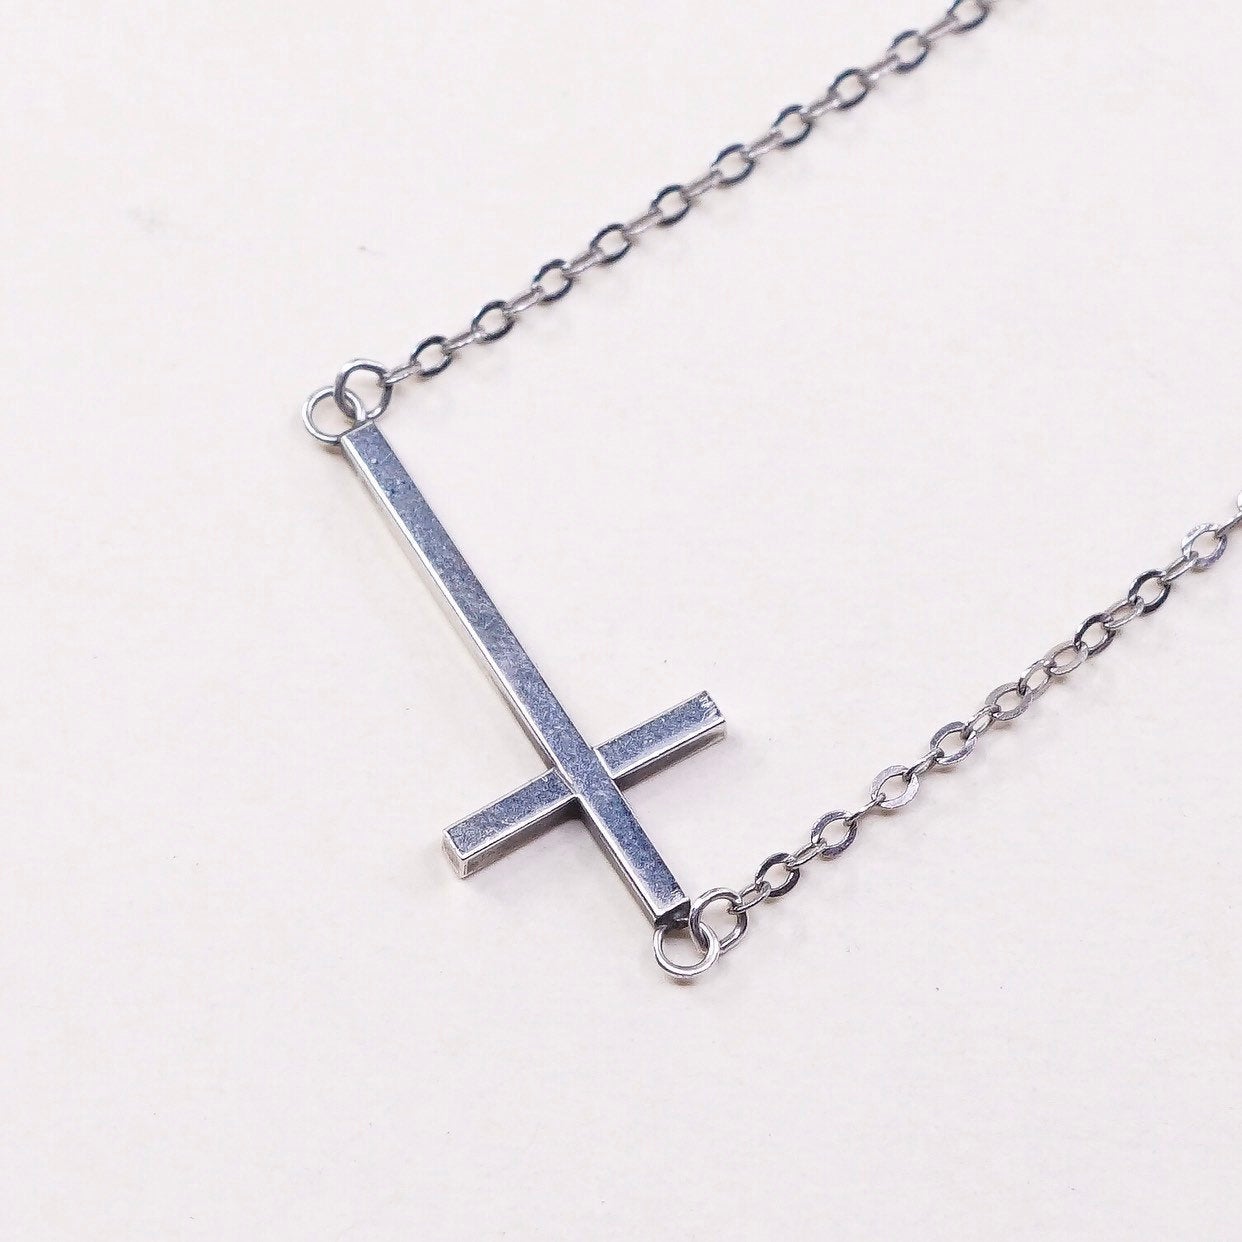 18”, vtg sterling silver flatten circle link chain w/ cross pendant, necklace